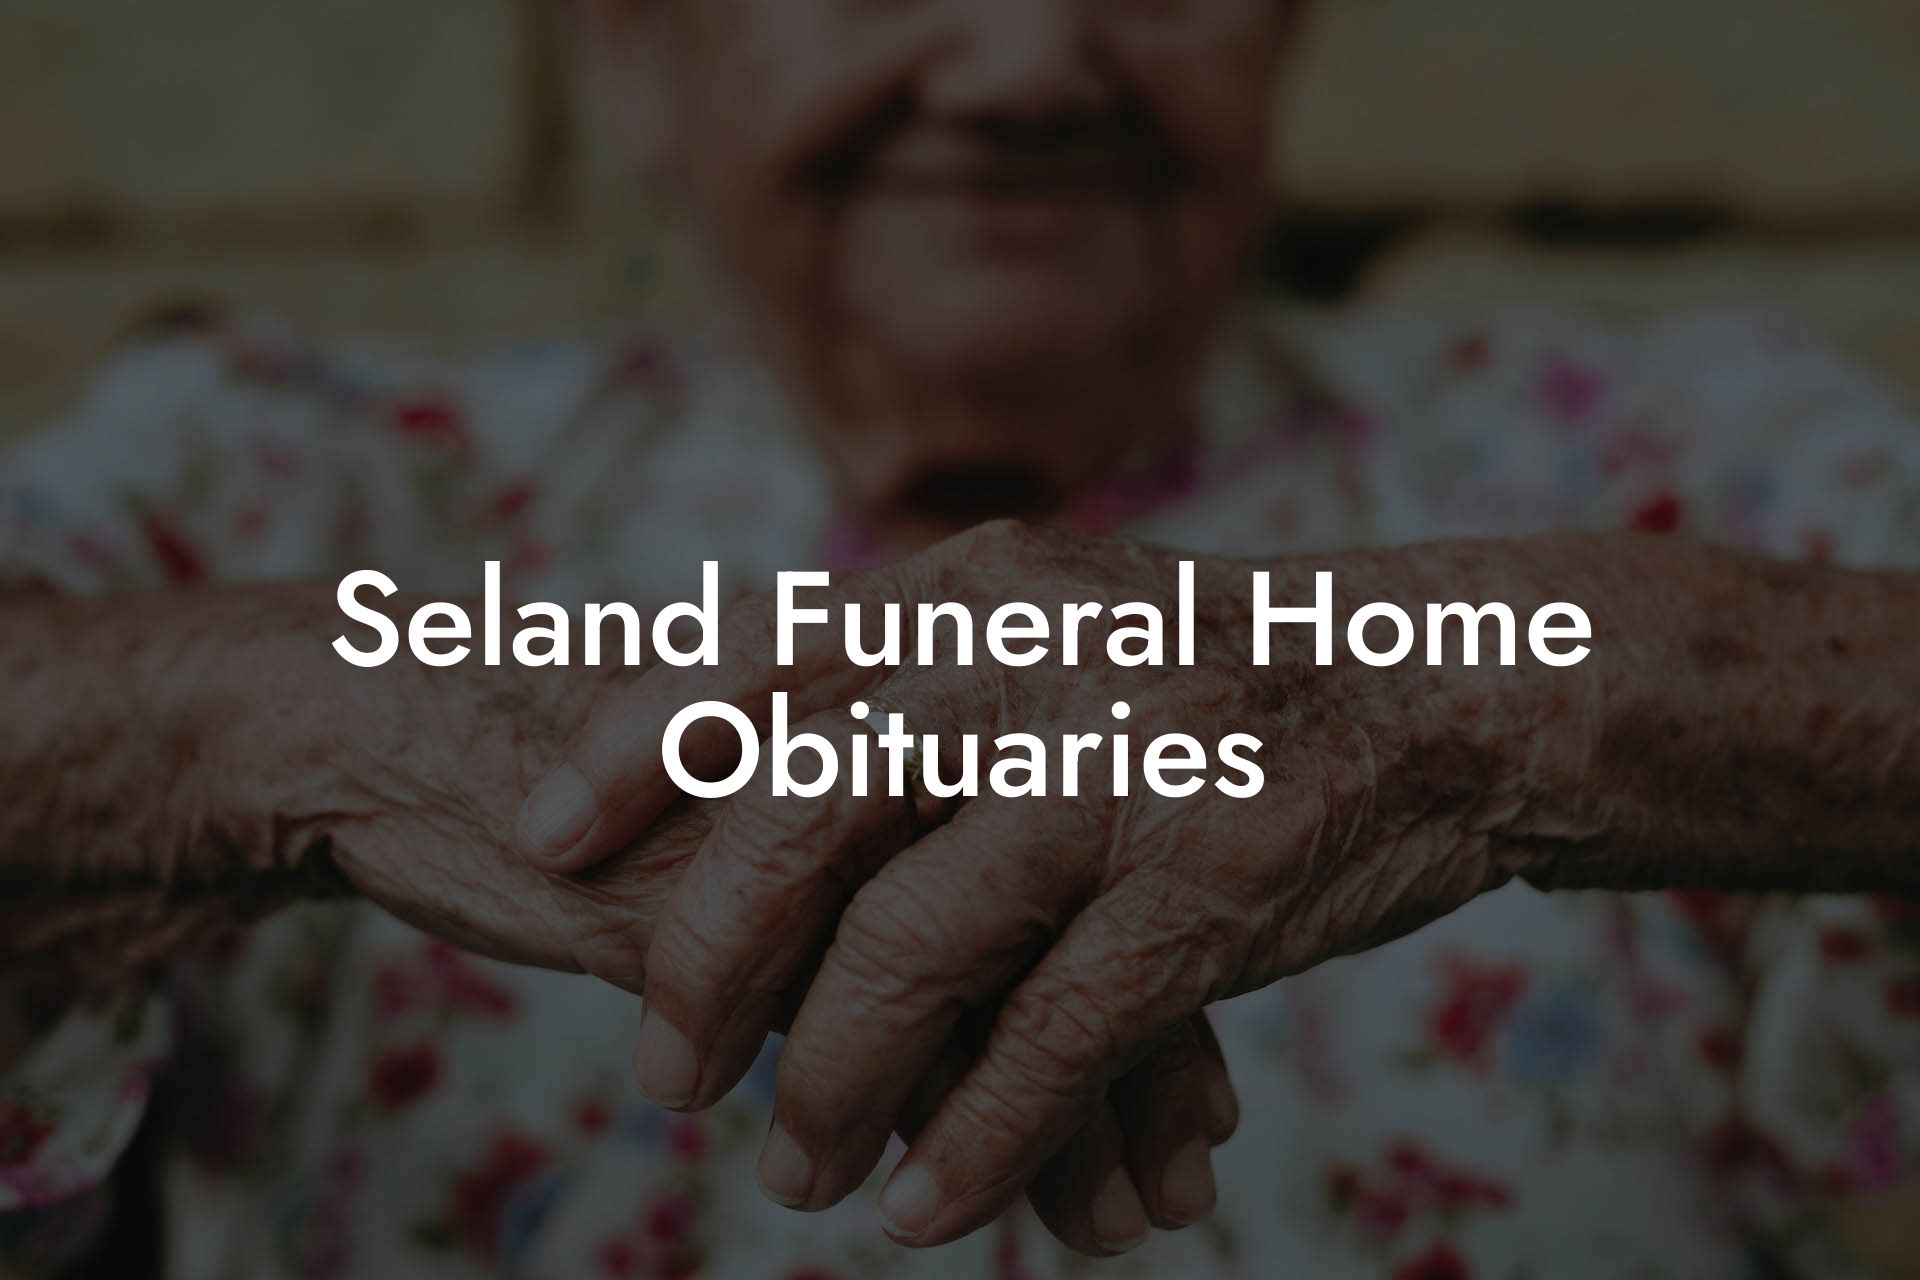 Seland Funeral Home Obituaries